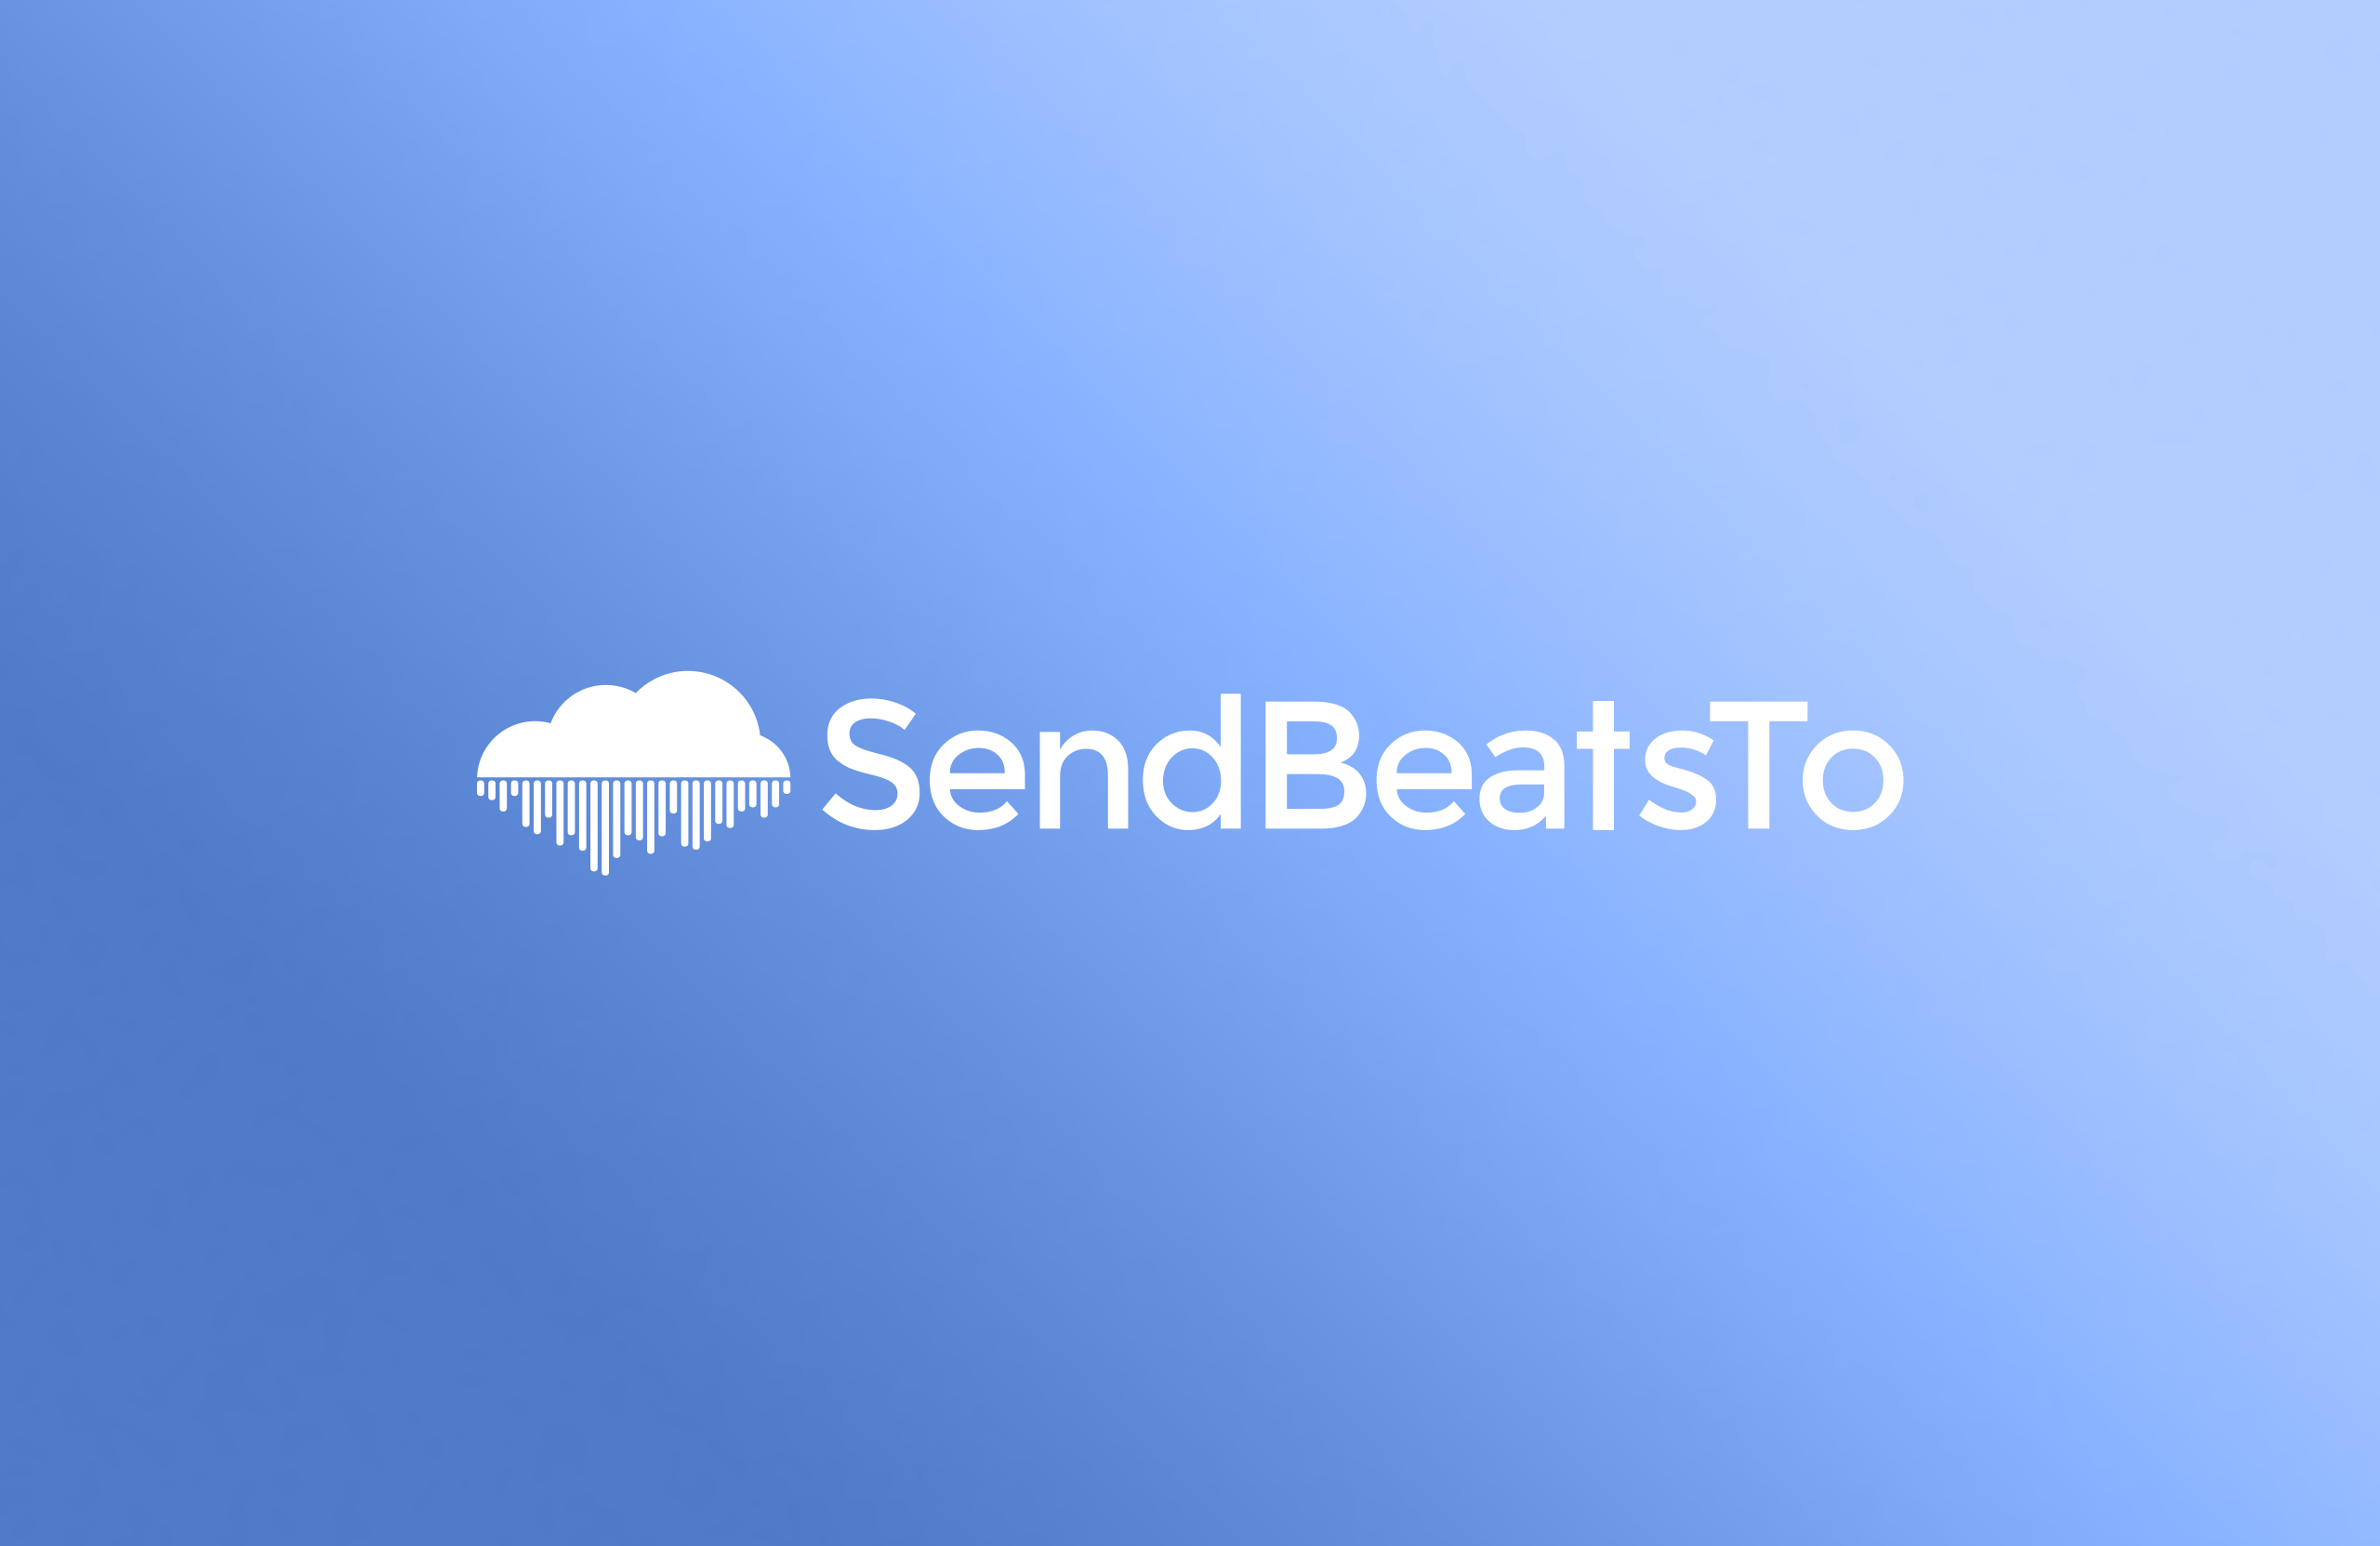 SendBeatsTo Logo by Garett Southerton, Creative Brand Strategist of Garett® based in Long Island, New York